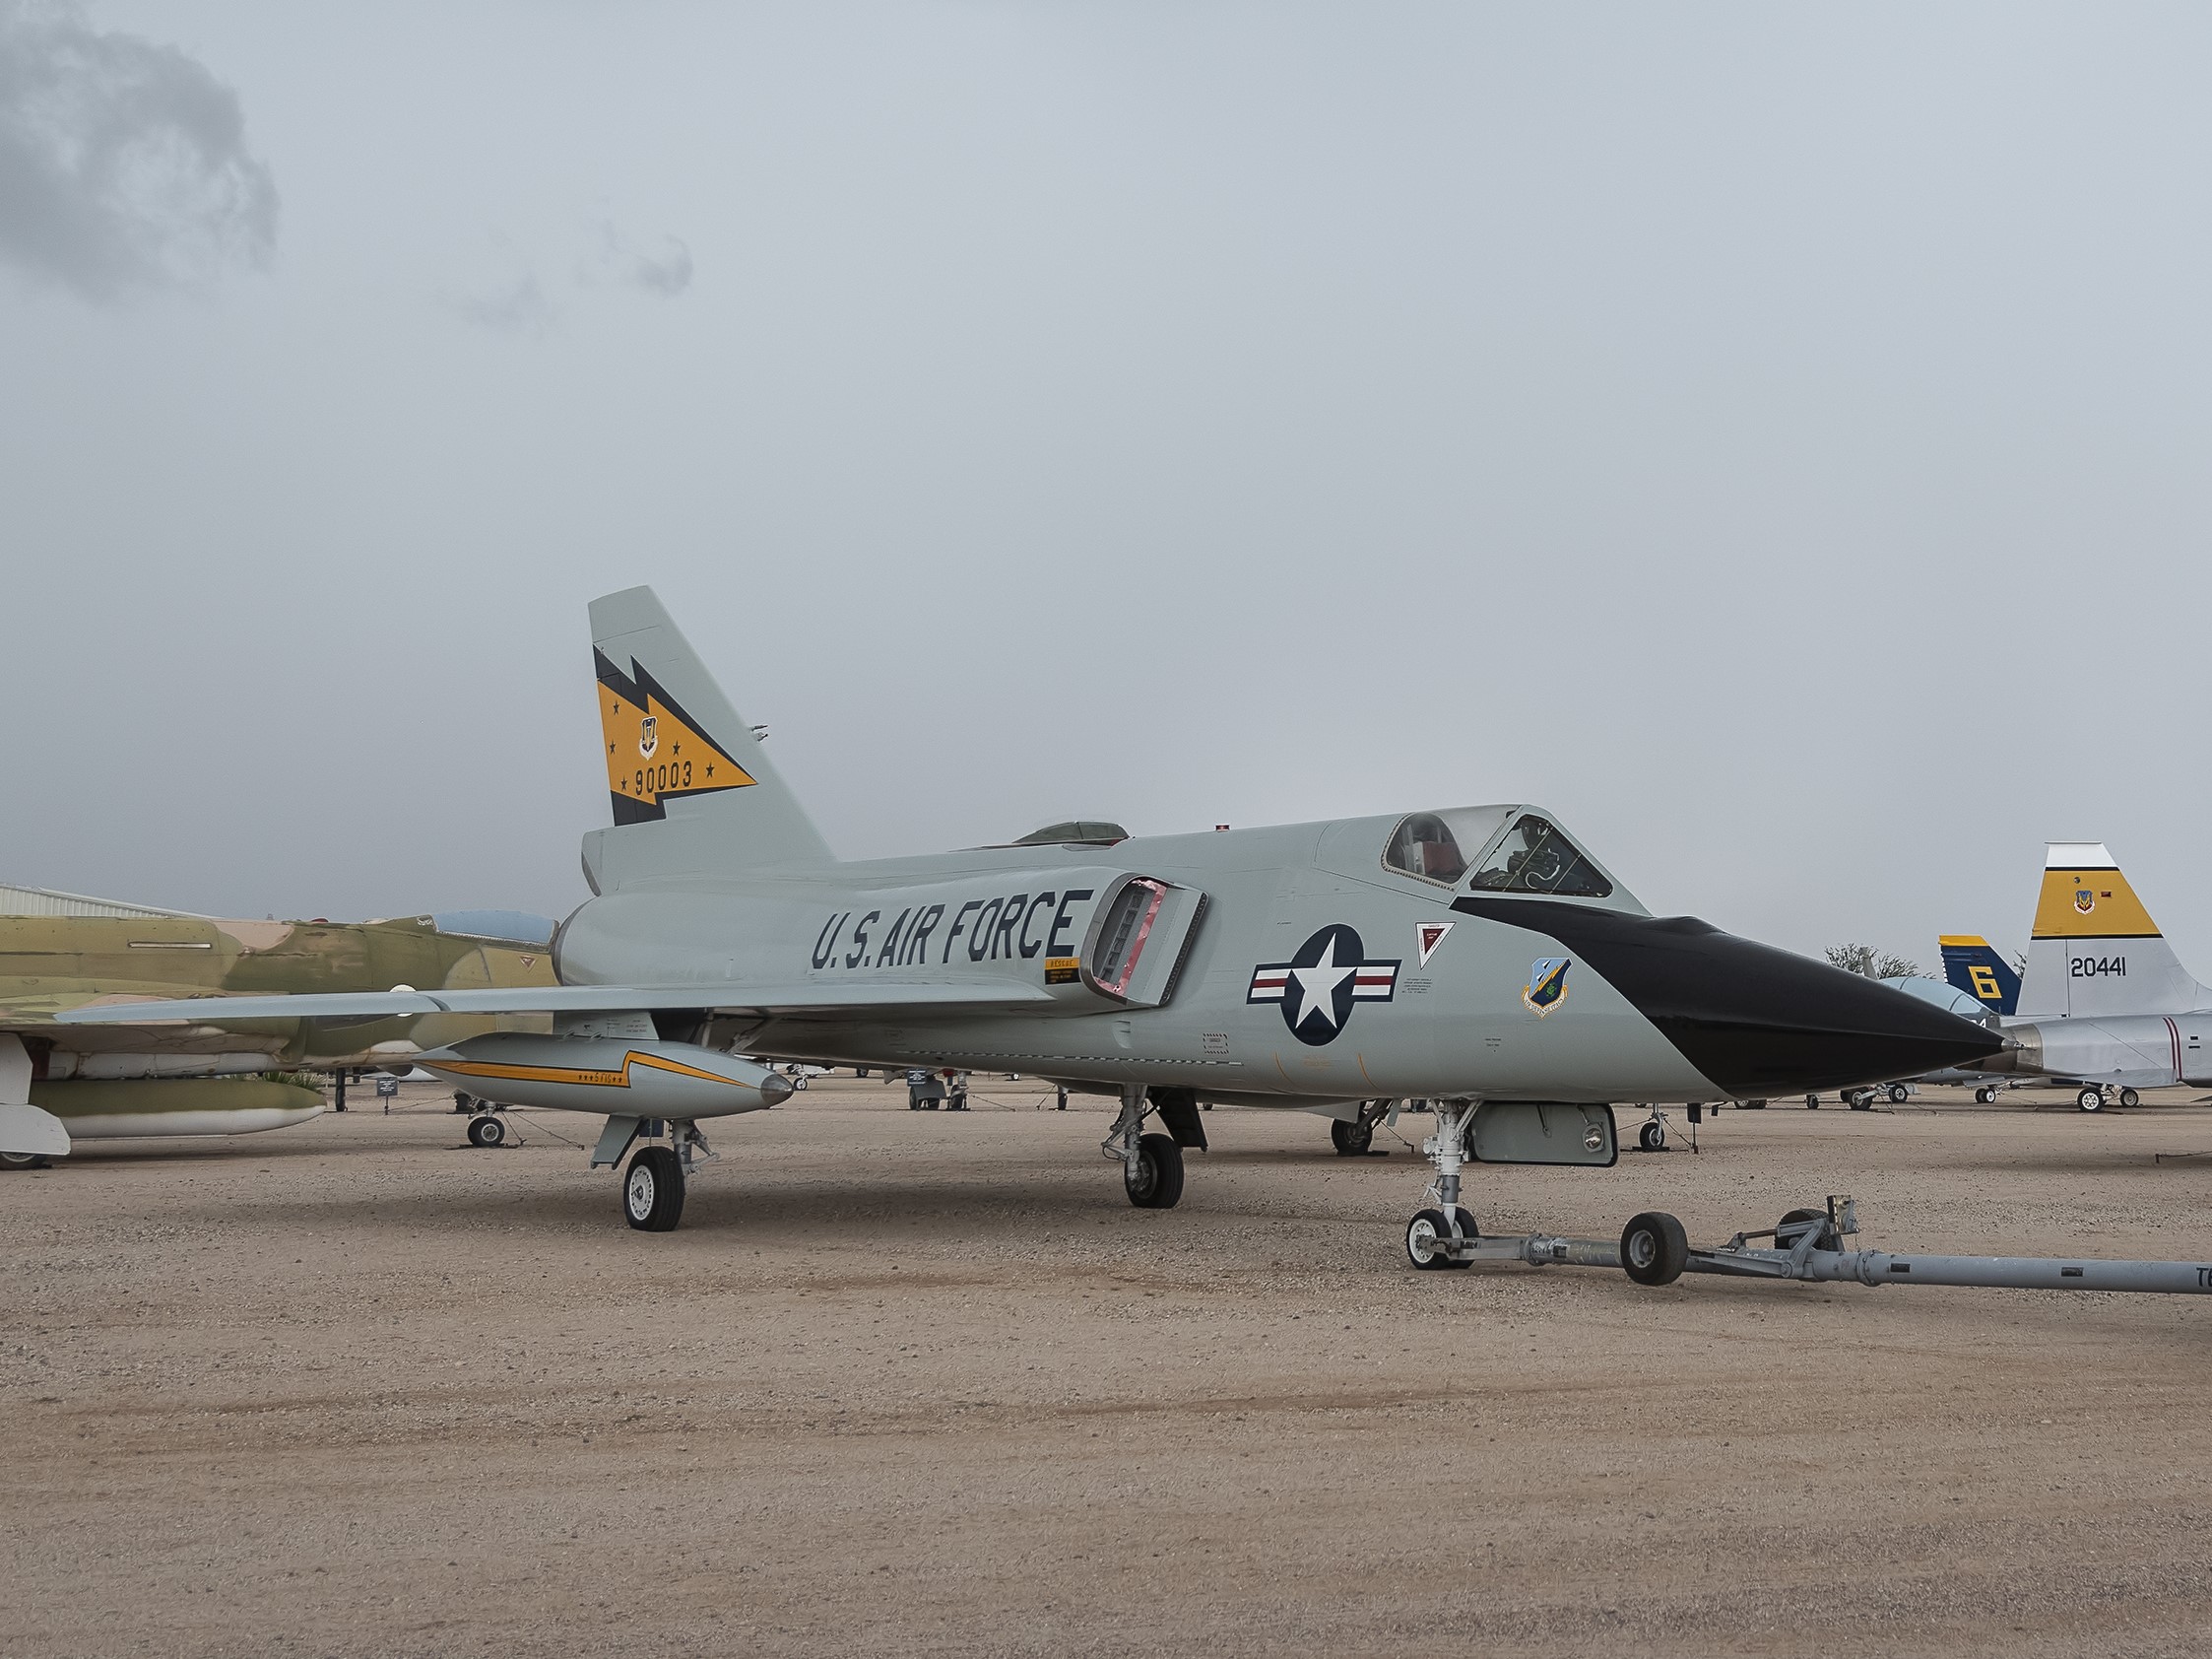 A picture of the Convair F-106A Delta Dart